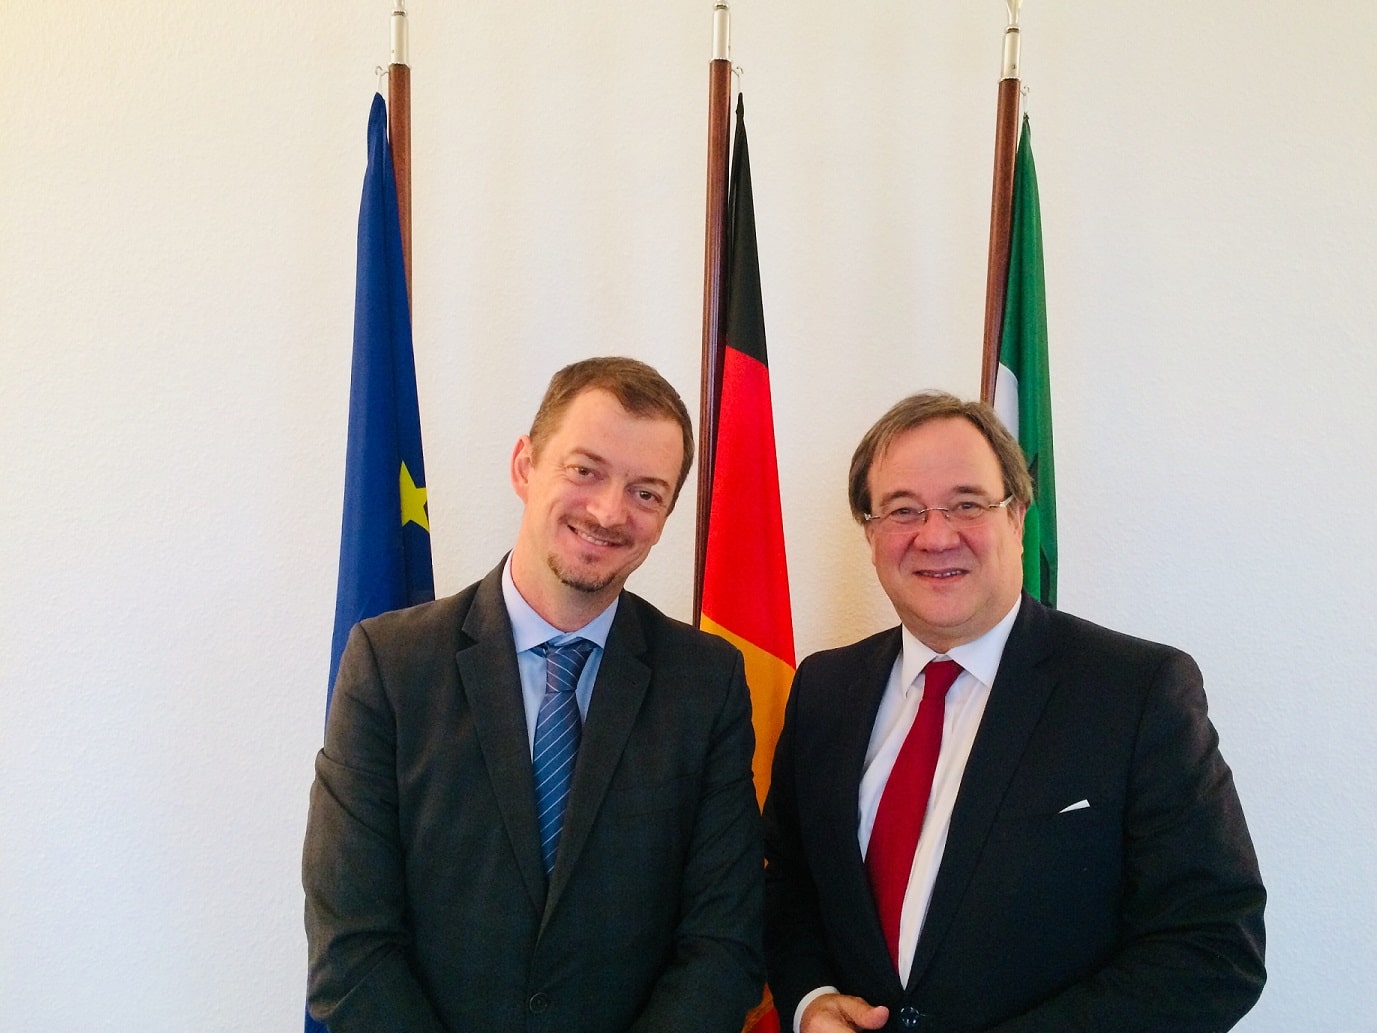 IPC President visits the State Premier of North Rhine-Westphalia